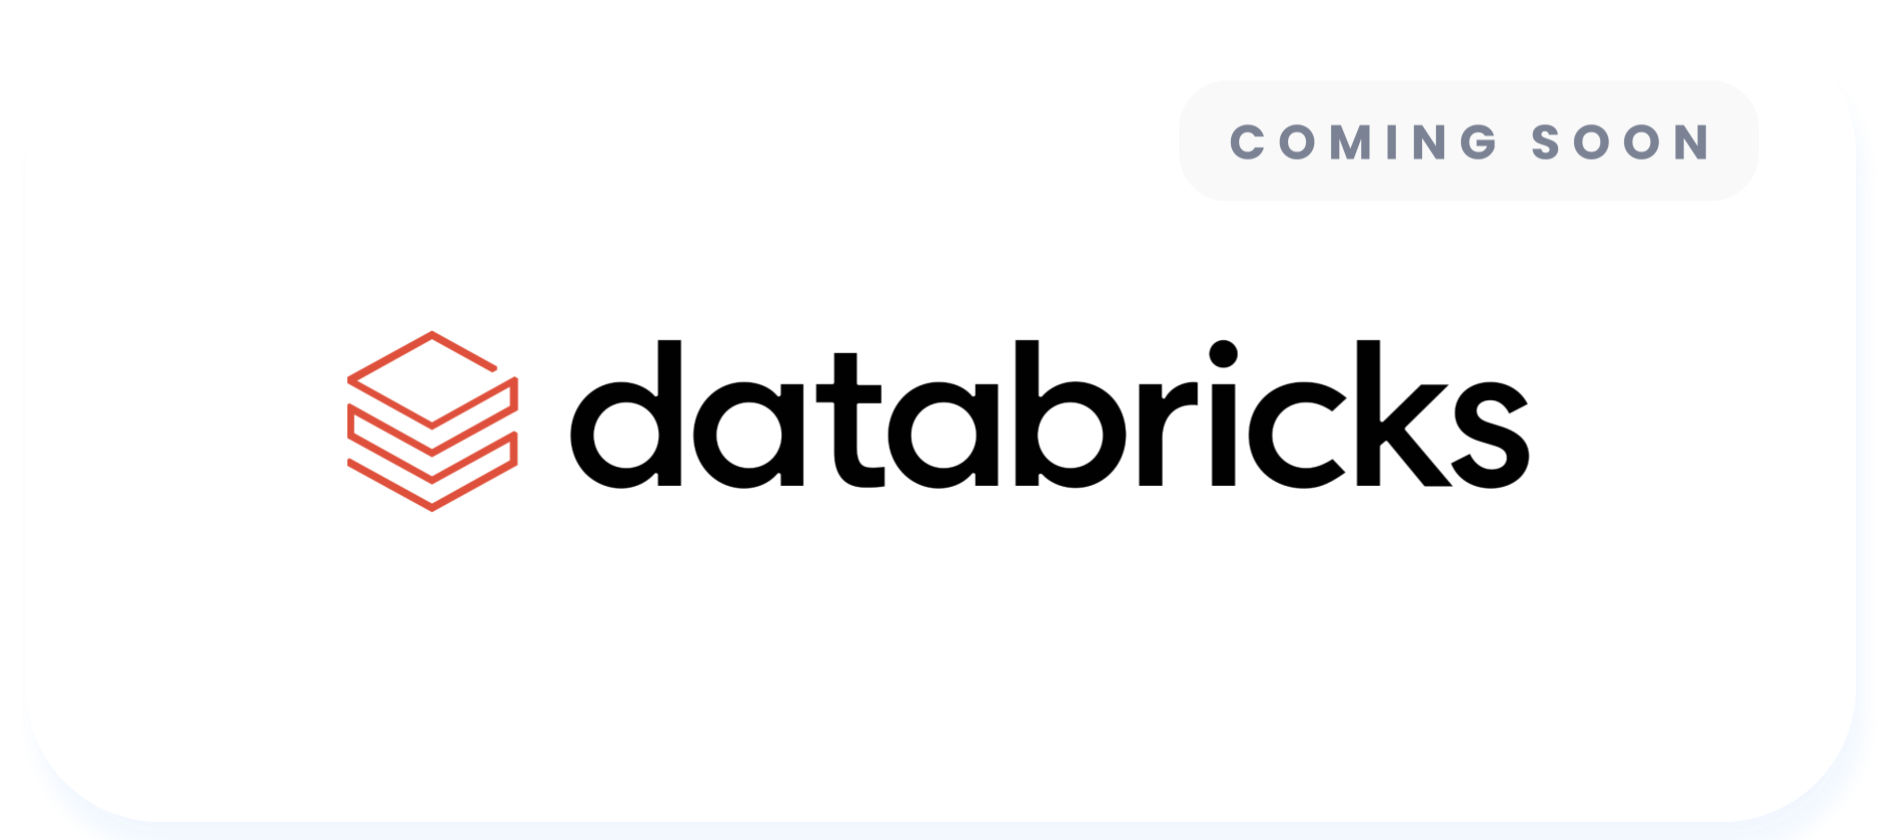 Logo databricks (coming soon)